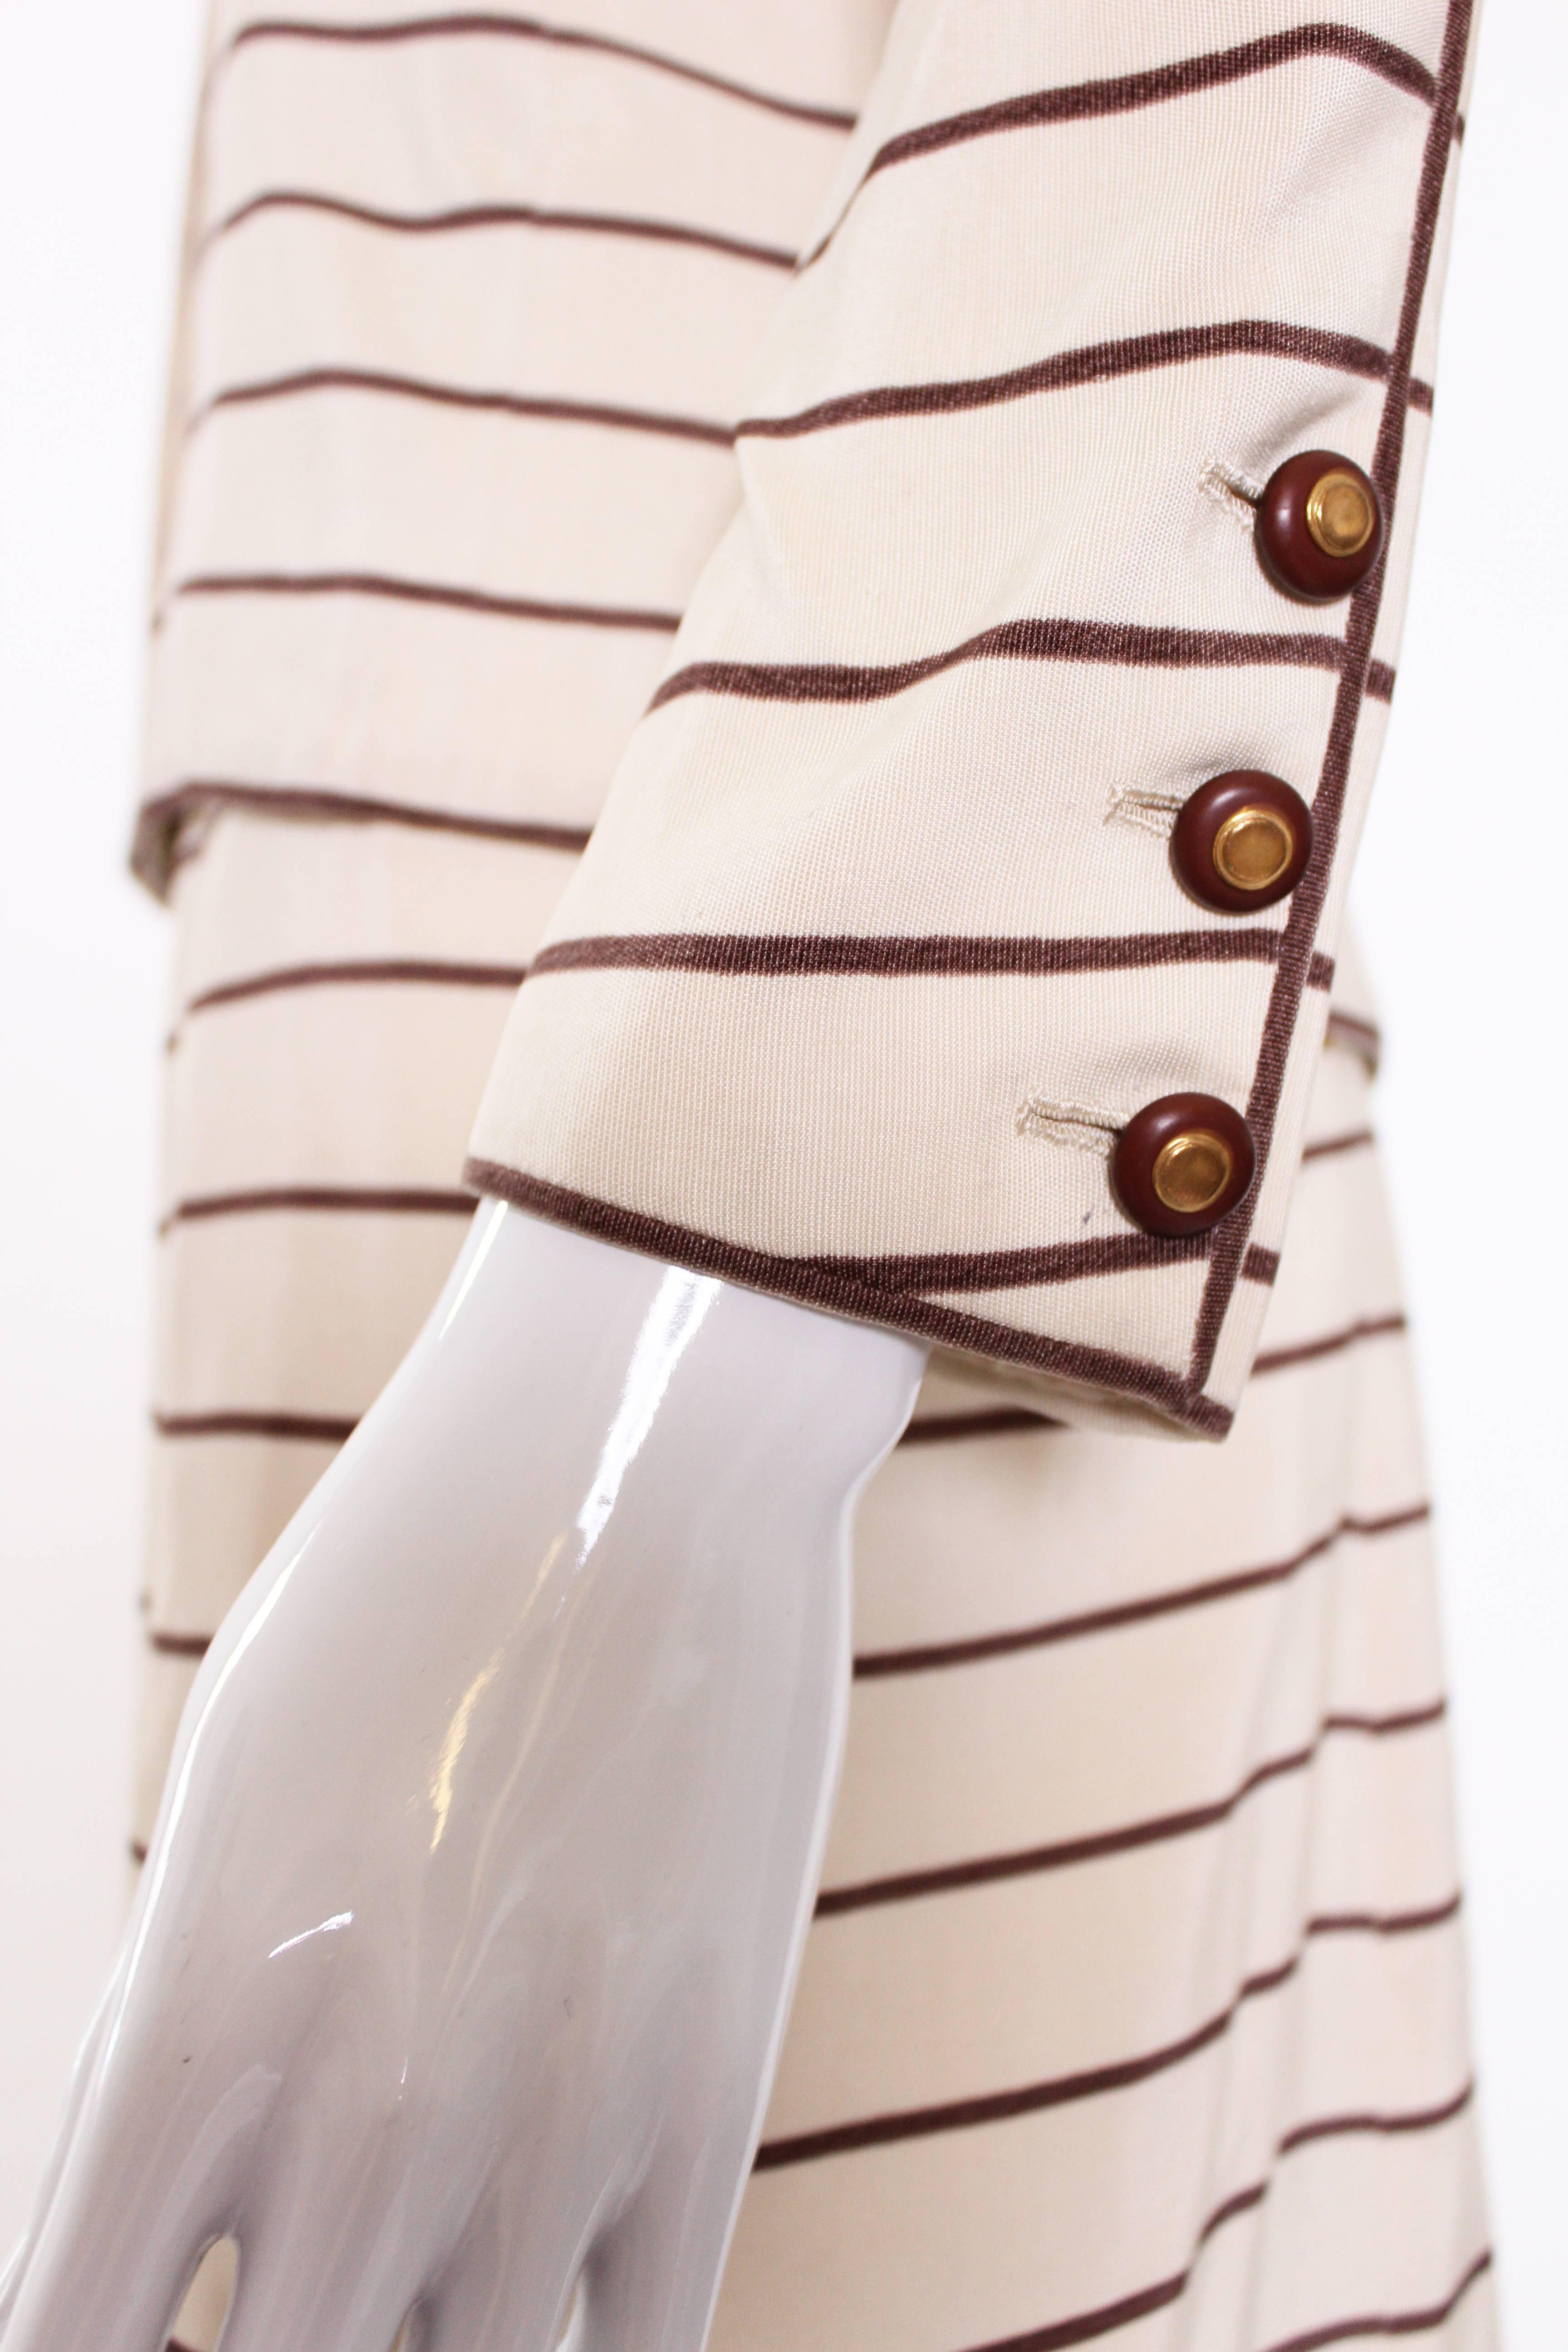 Vintage Chanel Haut Couture Skirt Suit 1974 For Sale 3